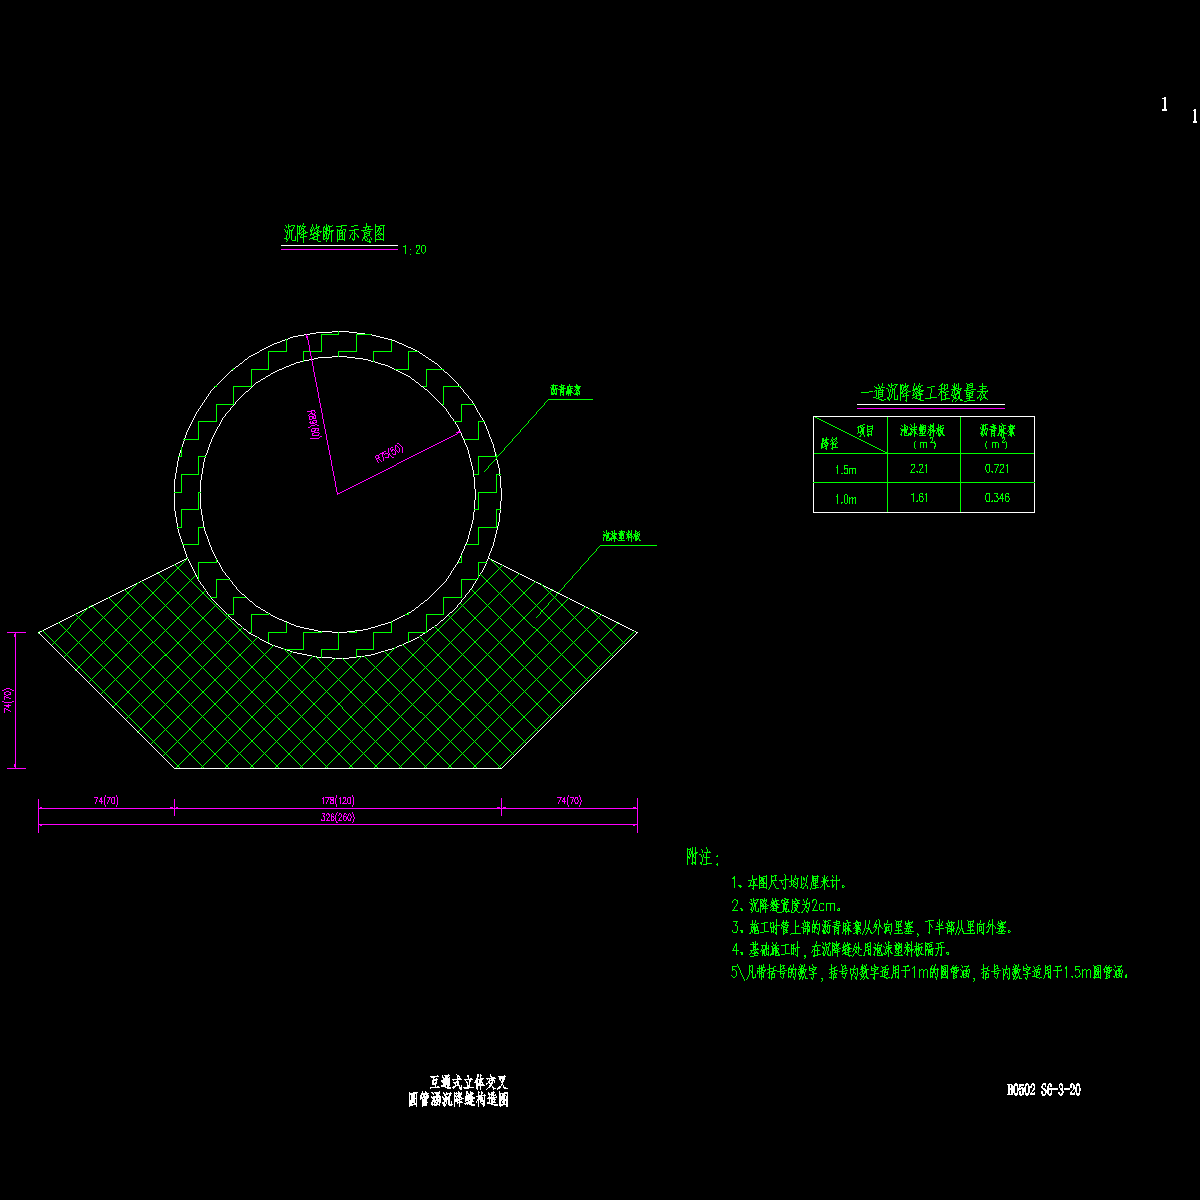 b0502 s6-3-20 圆管涵沉降缝构造图.dwg